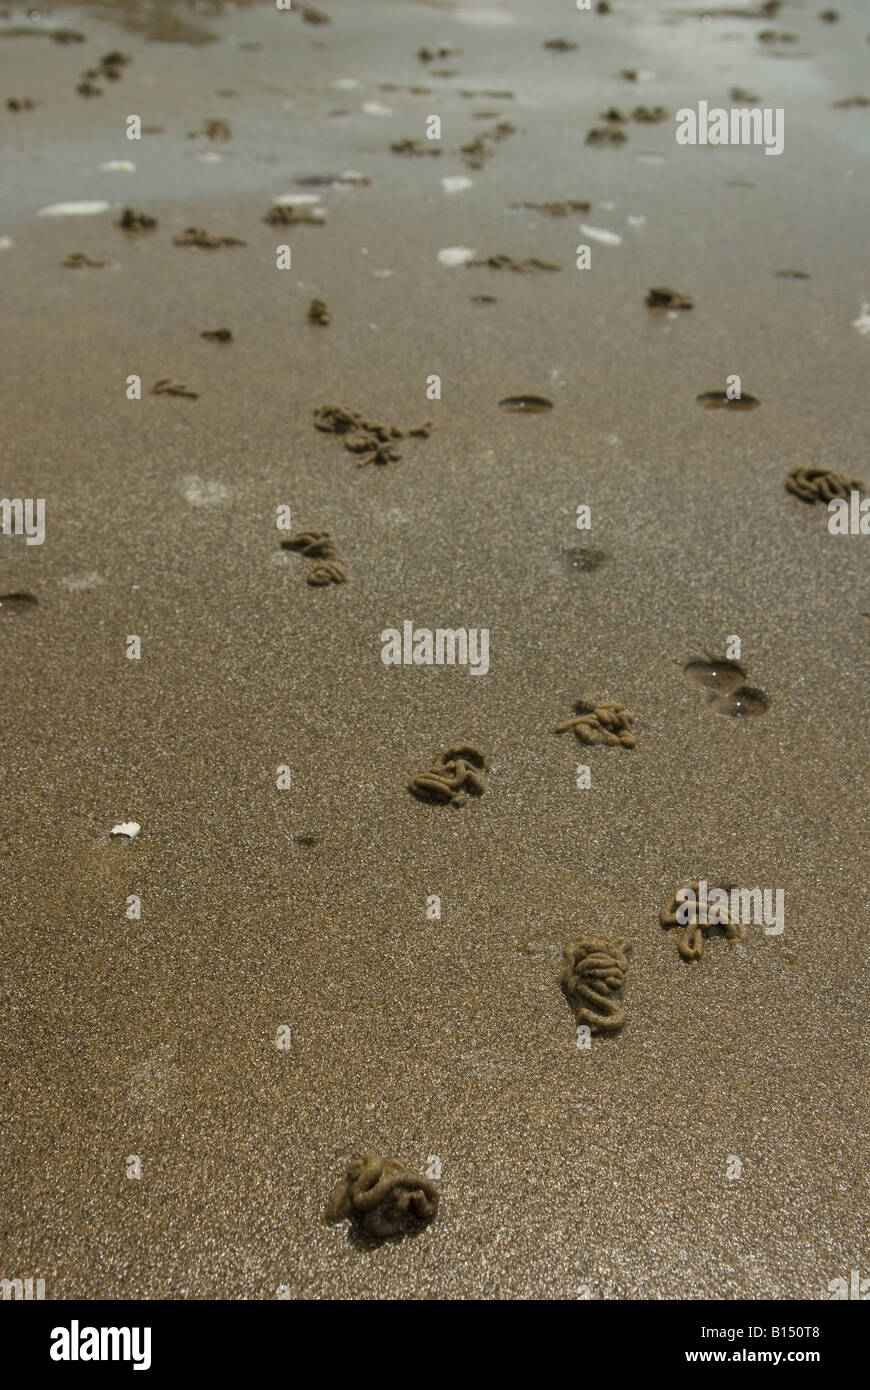 Worm casts on beach Stock Photo